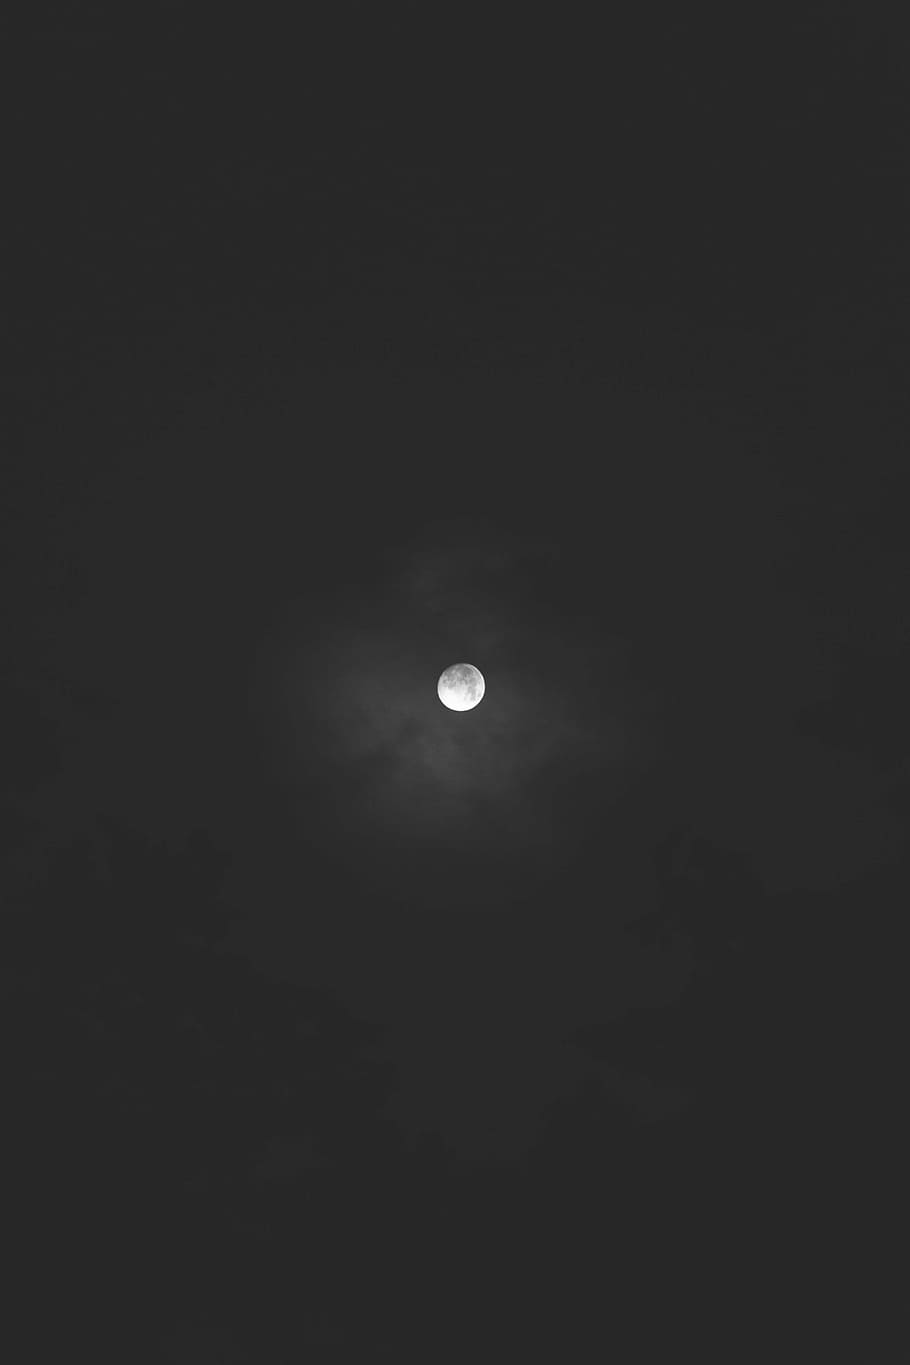 HD wallpaper: moon, full moon, nightsky, pitch black, dark, backgrounds,  astronomy | Wallpaper Flare